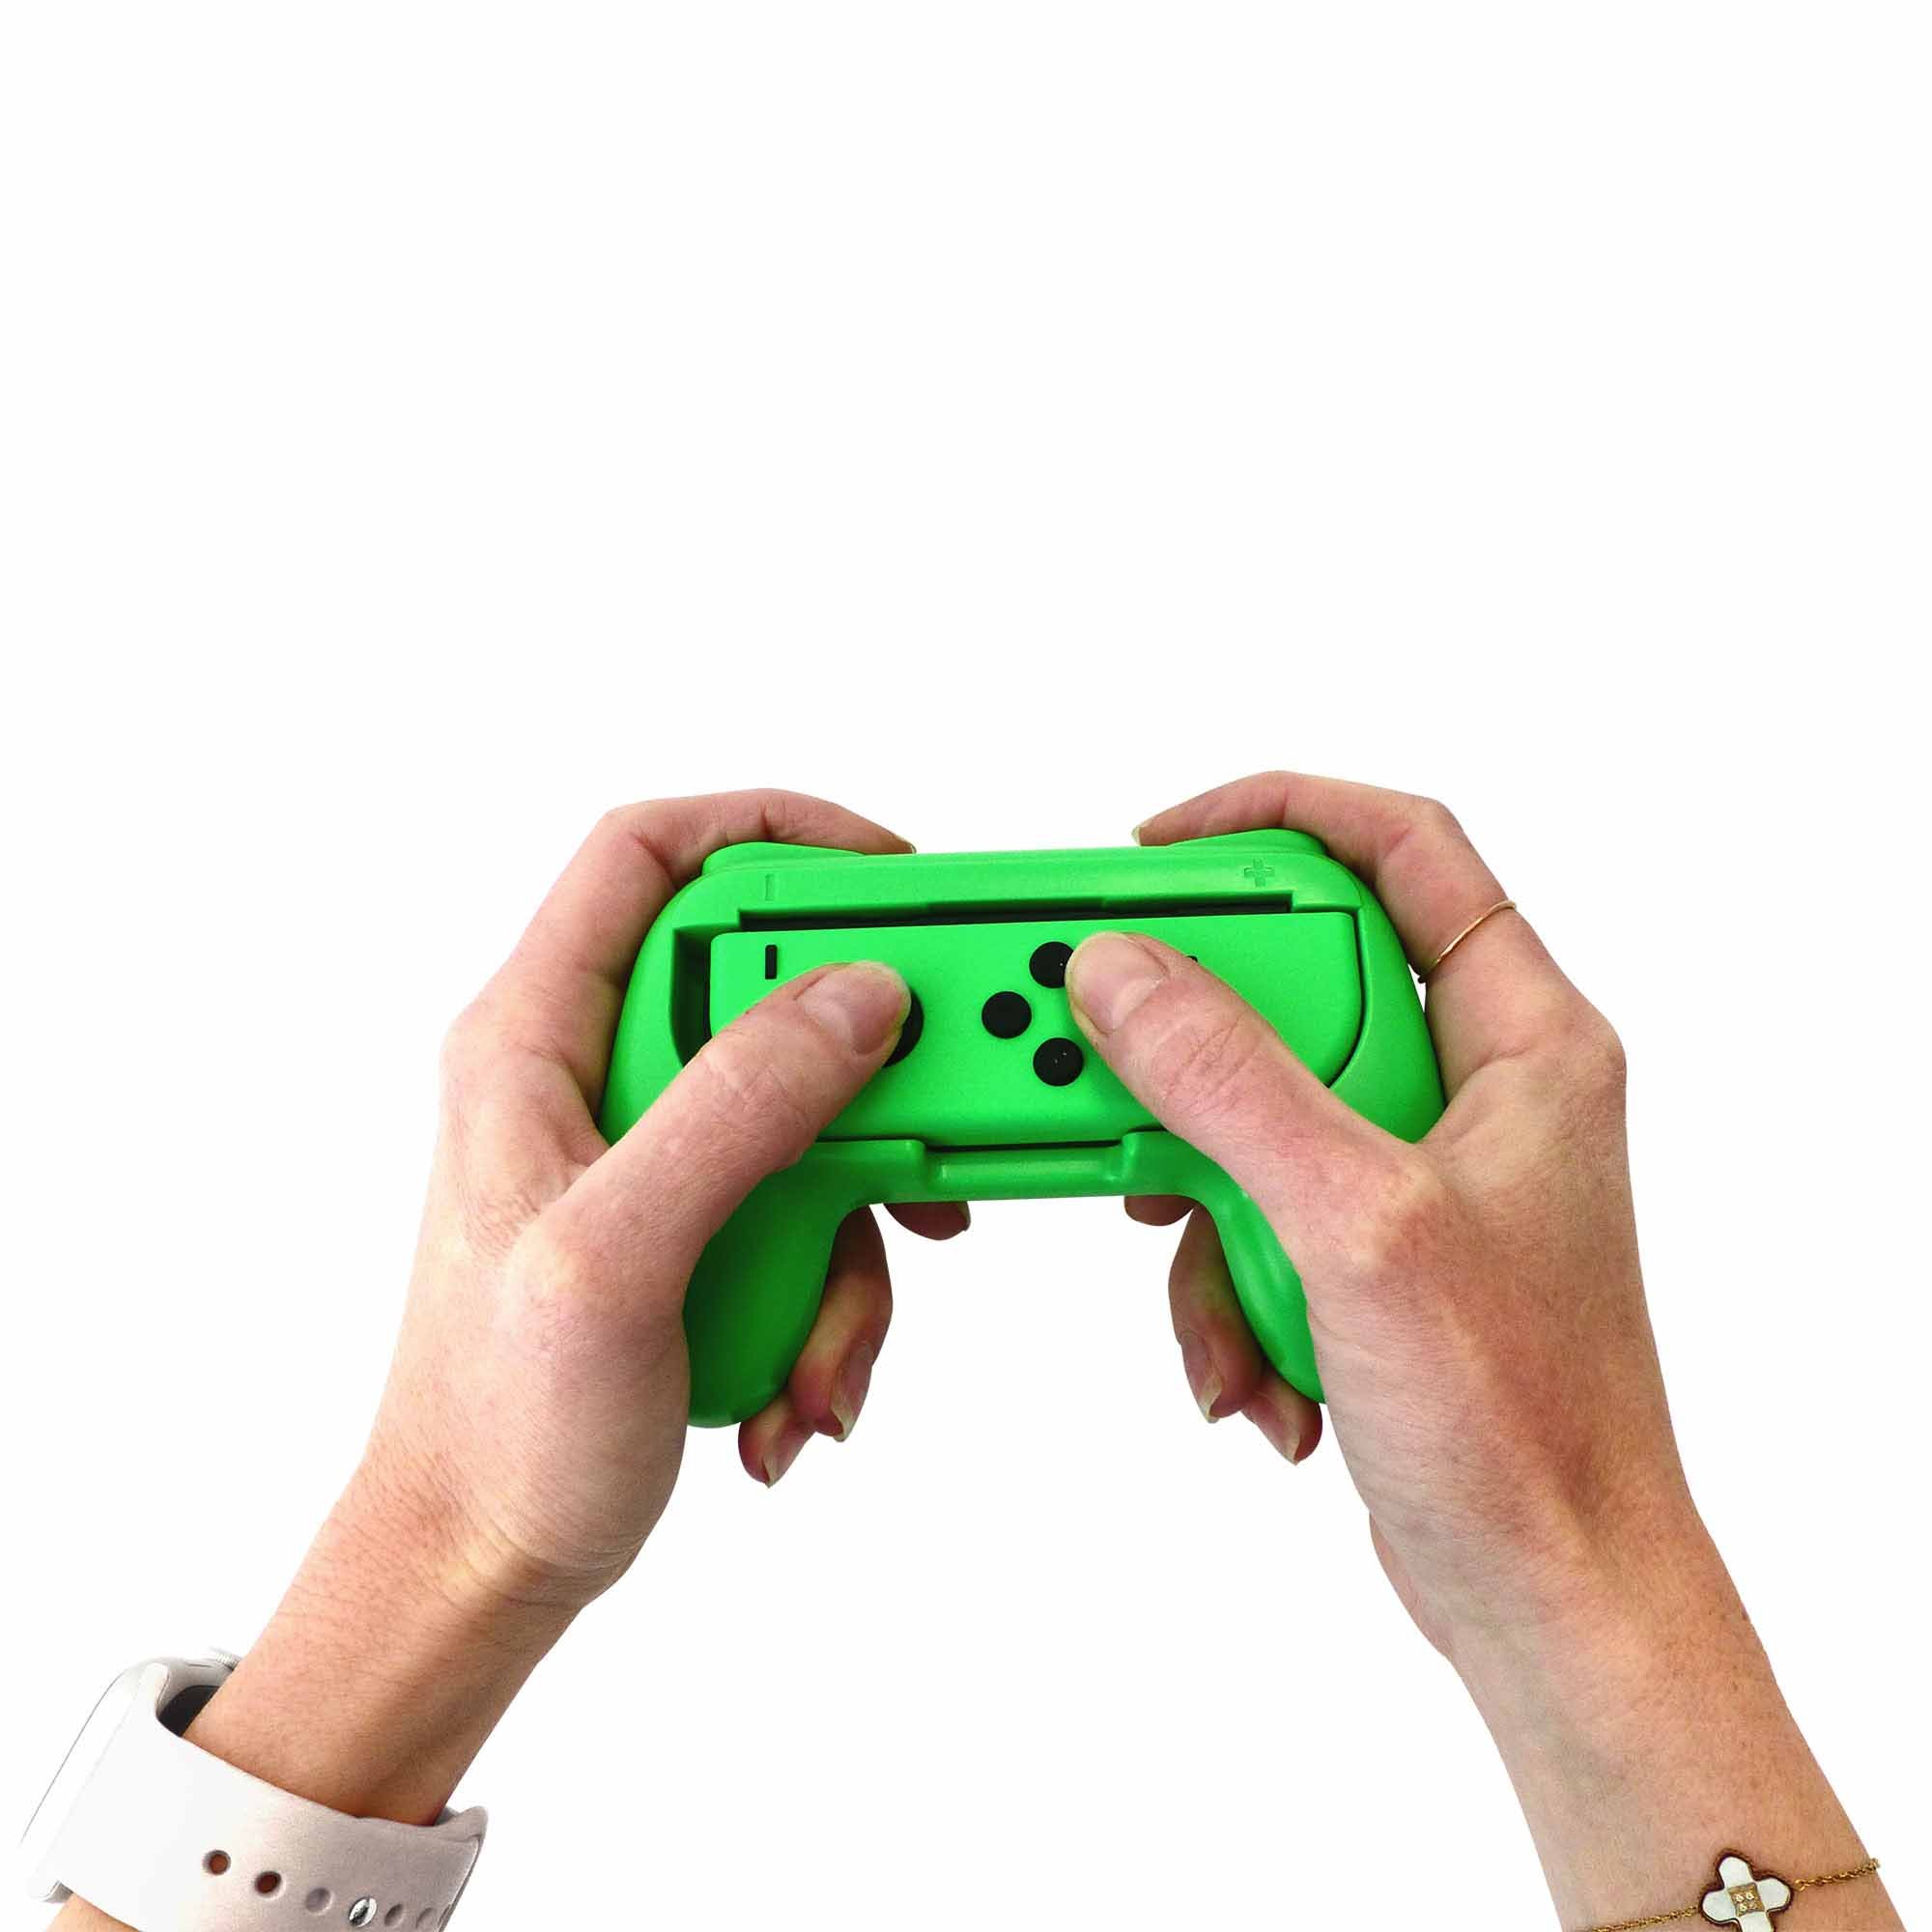 Comfort grip joystick for Joy-Cons